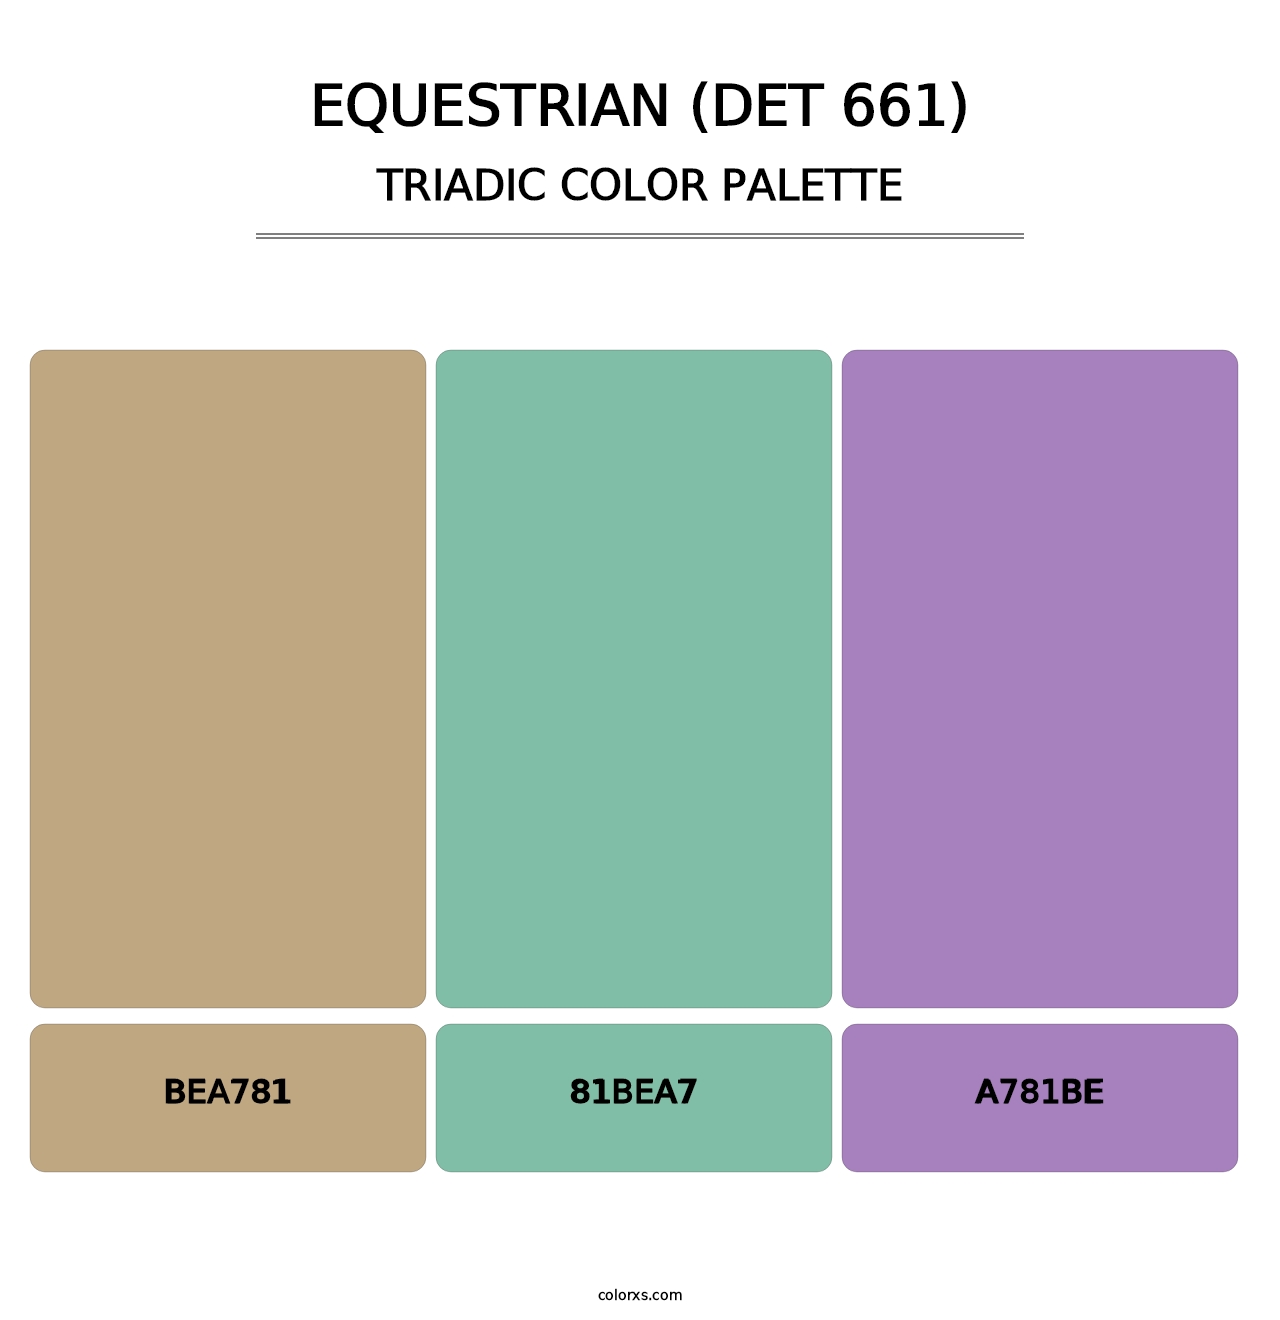 Equestrian (DET 661) - Triadic Color Palette